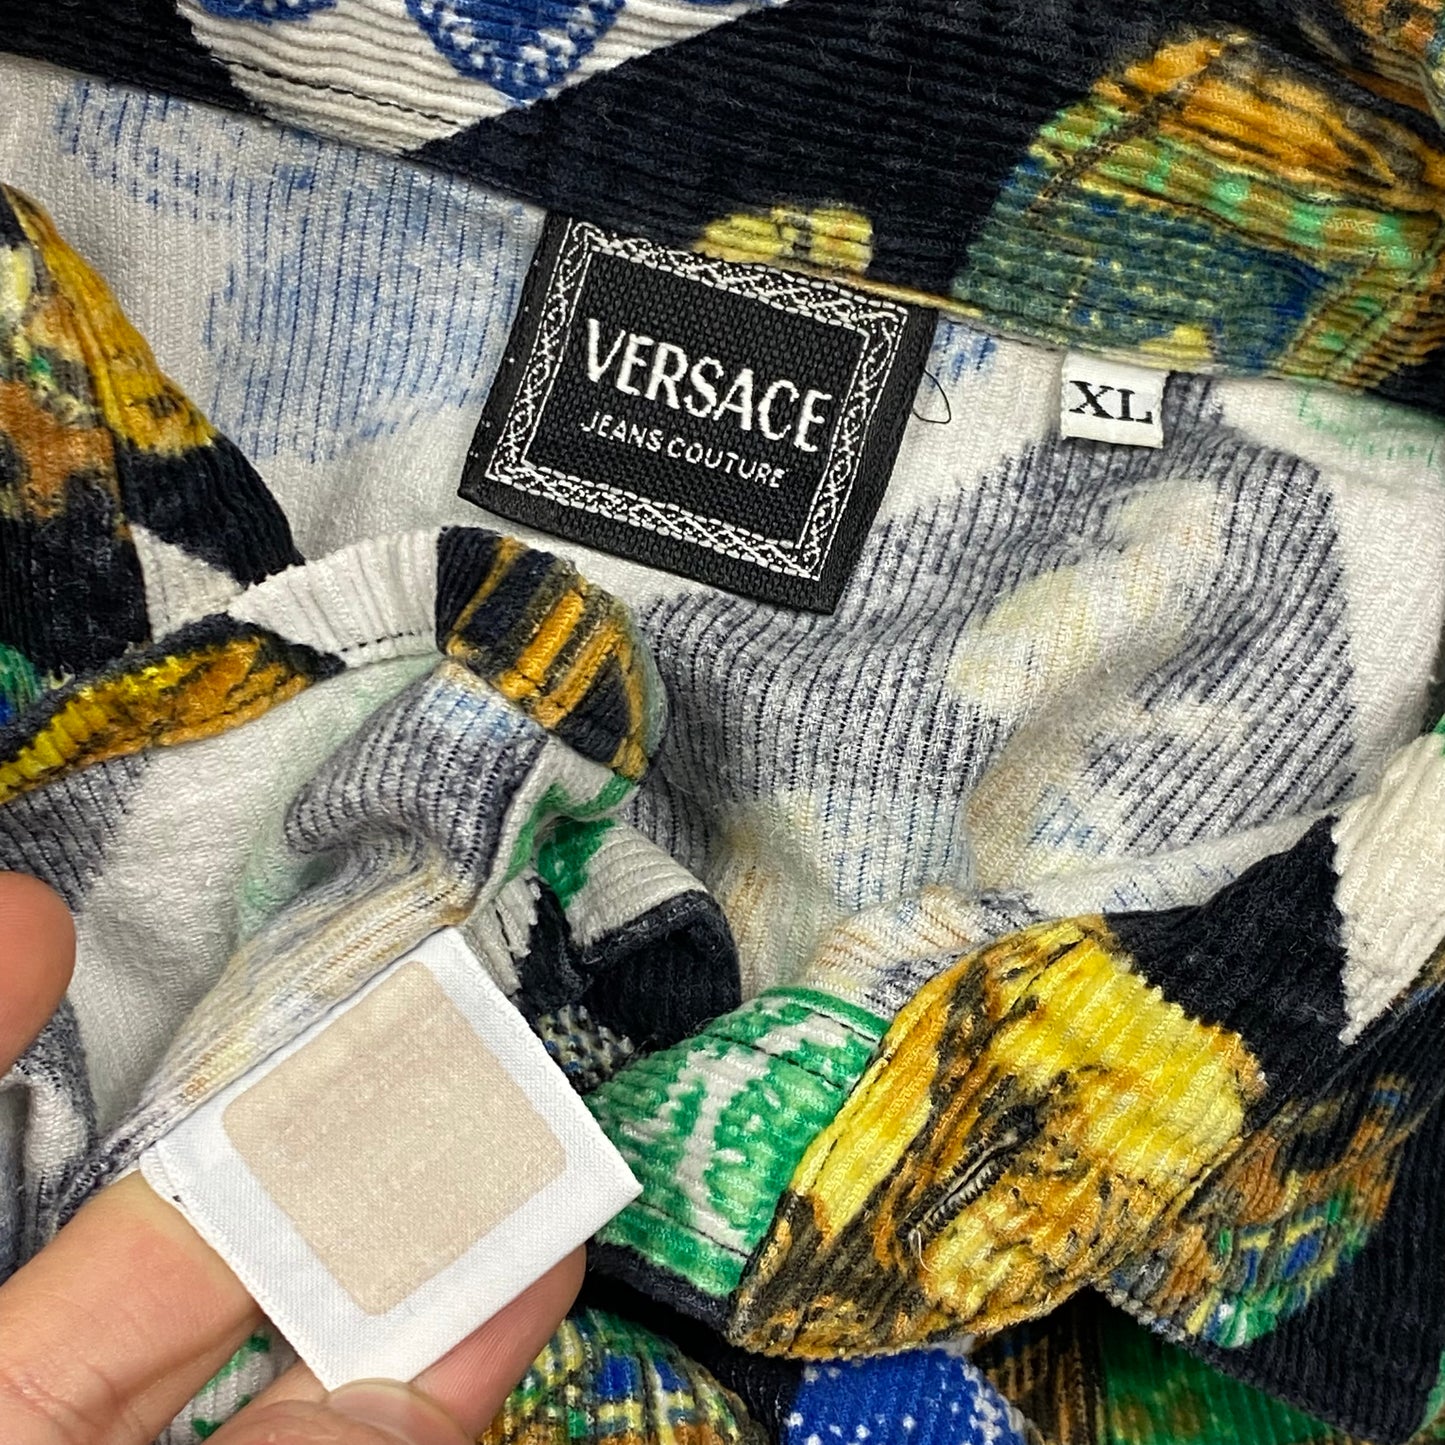 Versace VJC 90’s Corduroy Elephant Shirt - XL